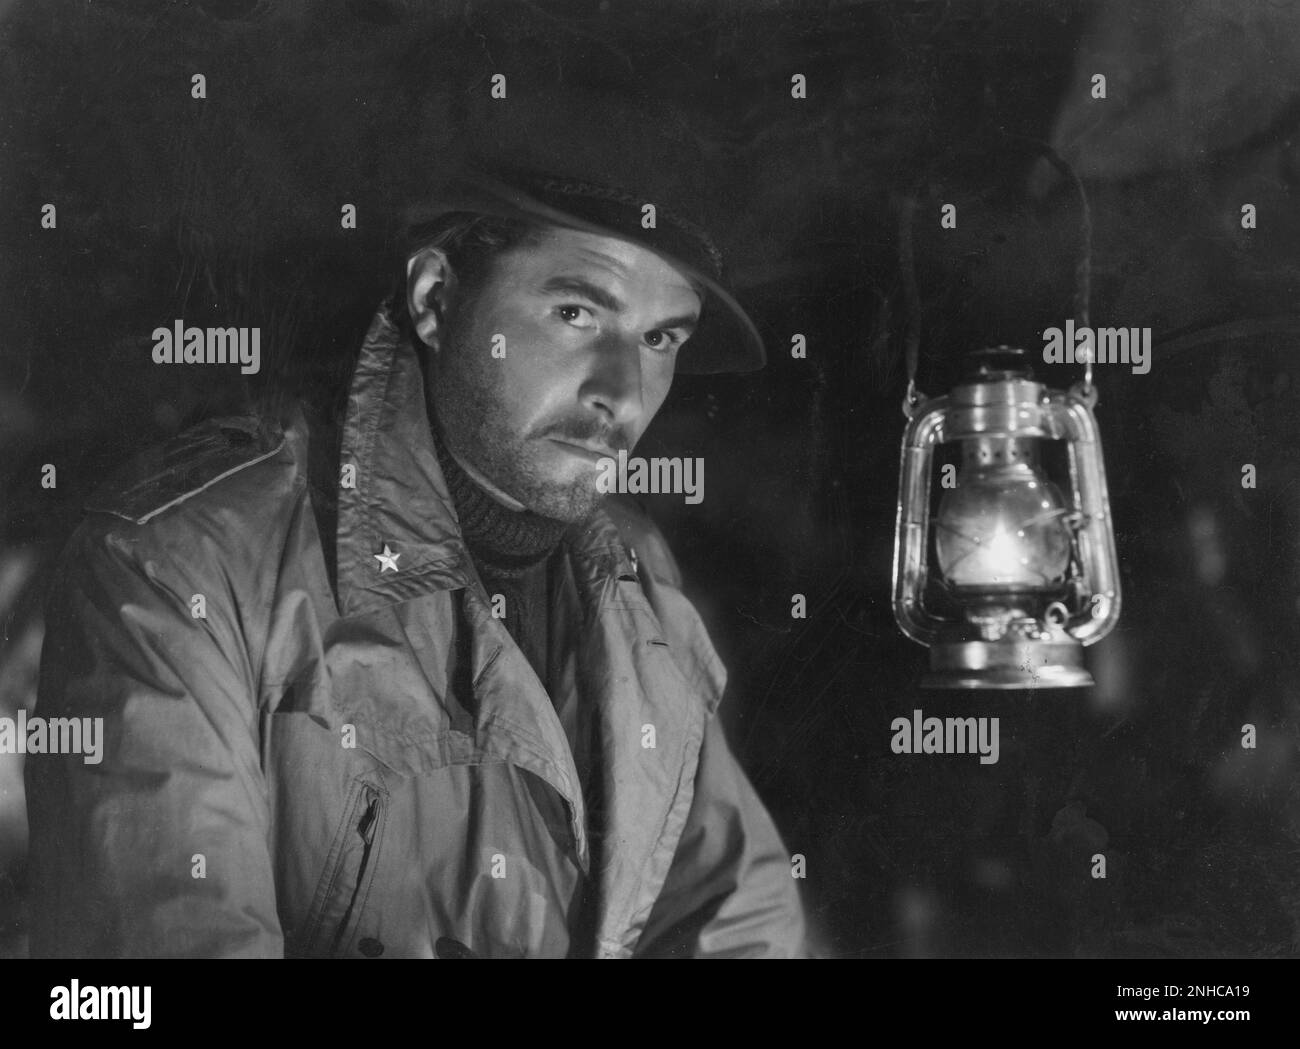 Cappello alpino Black and White Stock Photos & Images - Alamy